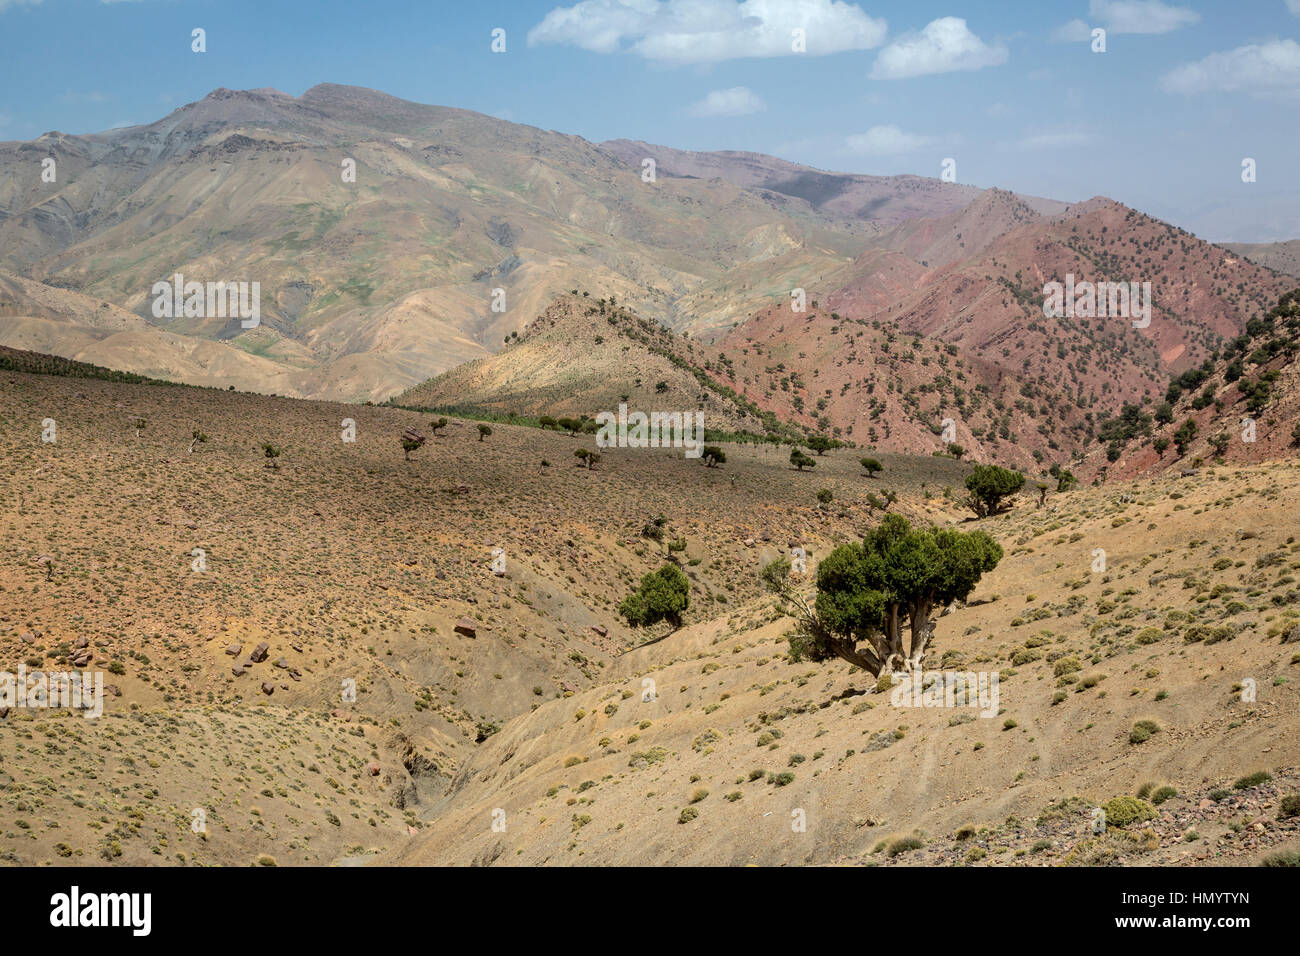 Atlas-Gebirge in der Nähe von Tizi N'Tichka übergeben, Marokko.  Semi-ariden Terrain. Stockfoto